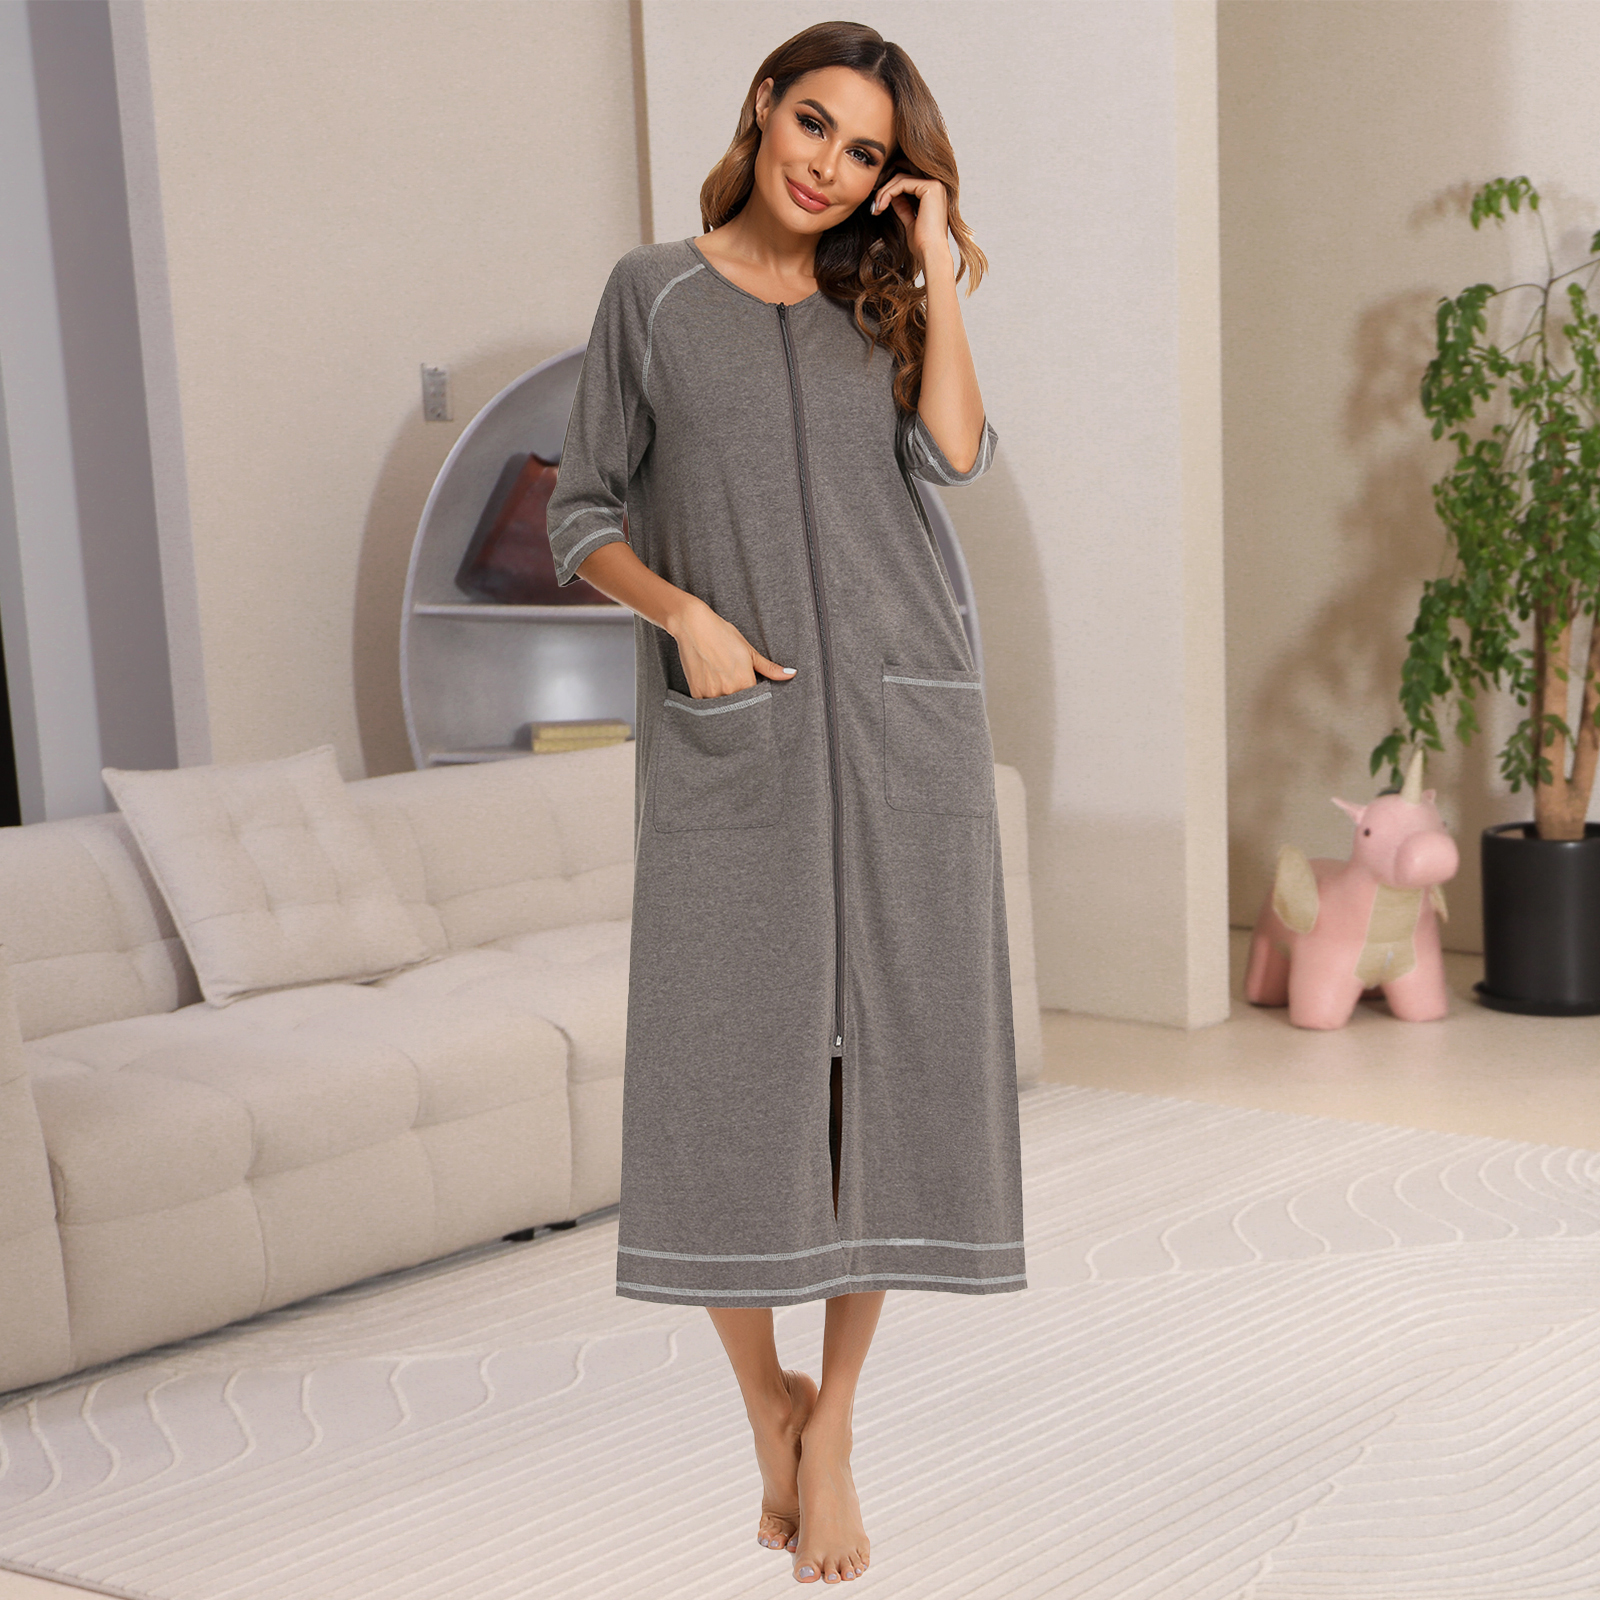 LOFIR Women Zipper Front Robes 3/4 Sleeve Loungewear Pockets Nightgown Loose-Fitting Ladies Long Sleepwear(Grey,L) - image 2 of 7